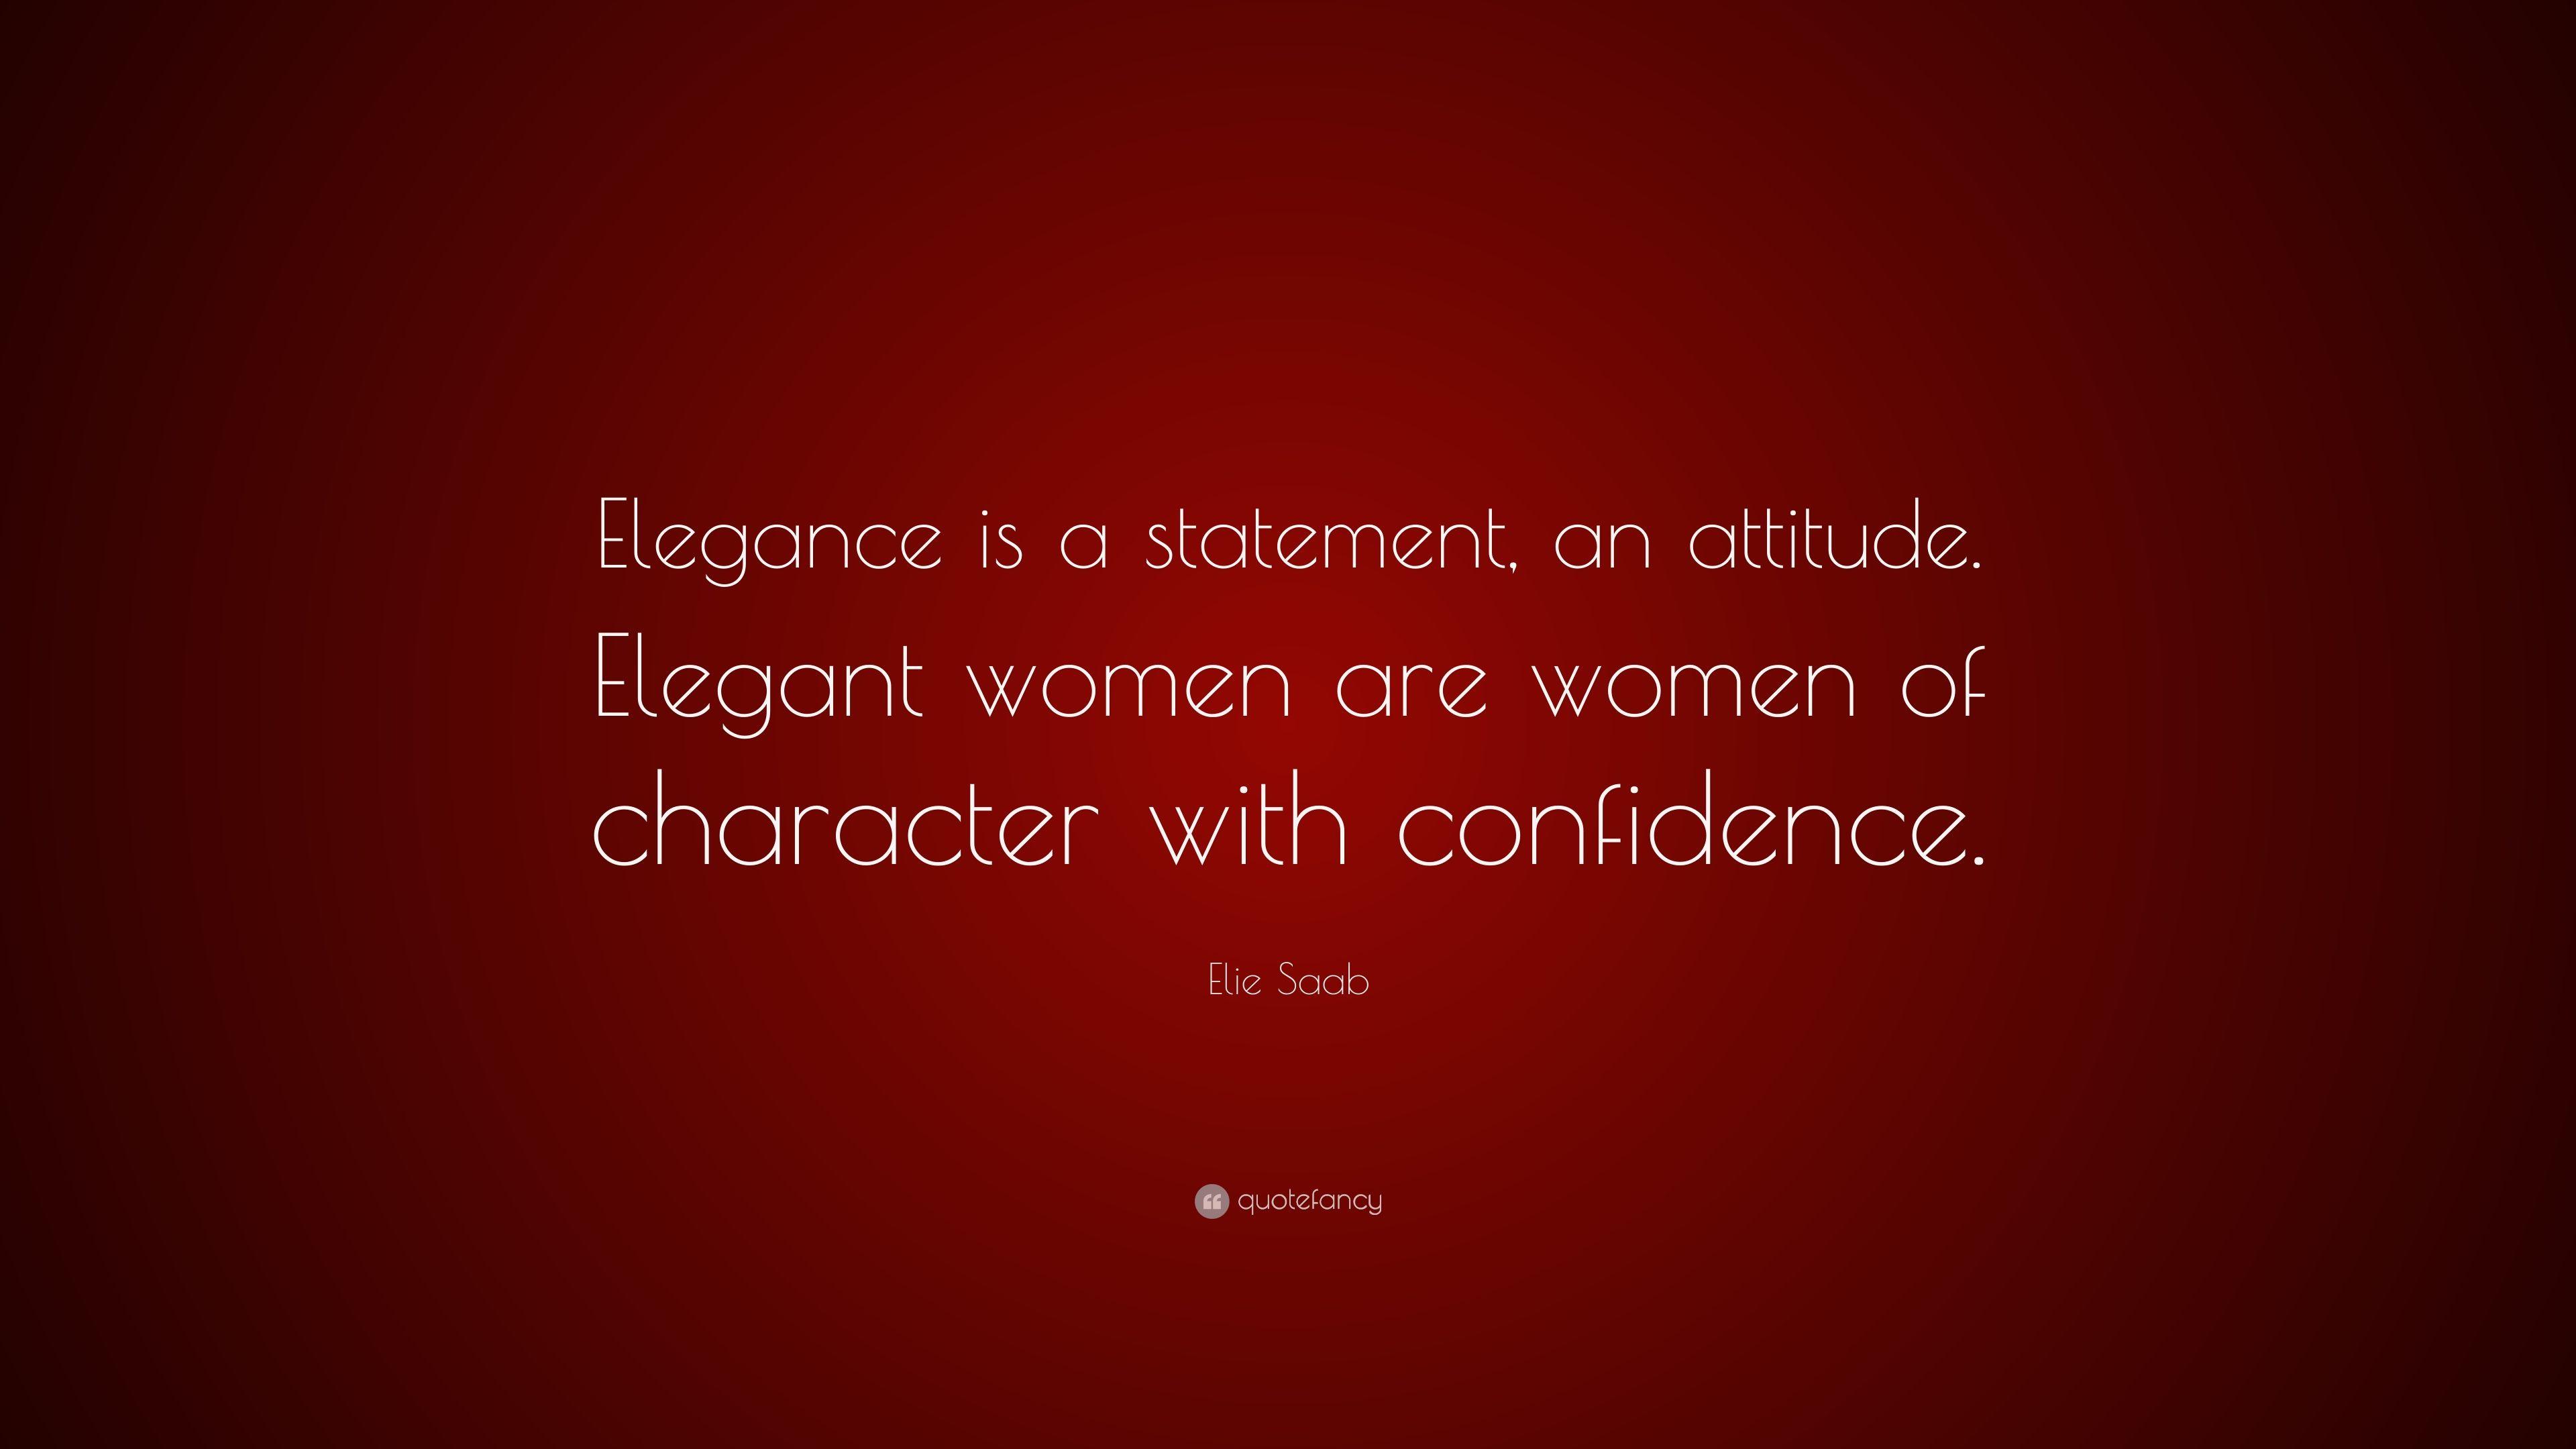 Elie Saab Quote: “Elegance is a statement, an attitude. Elegant